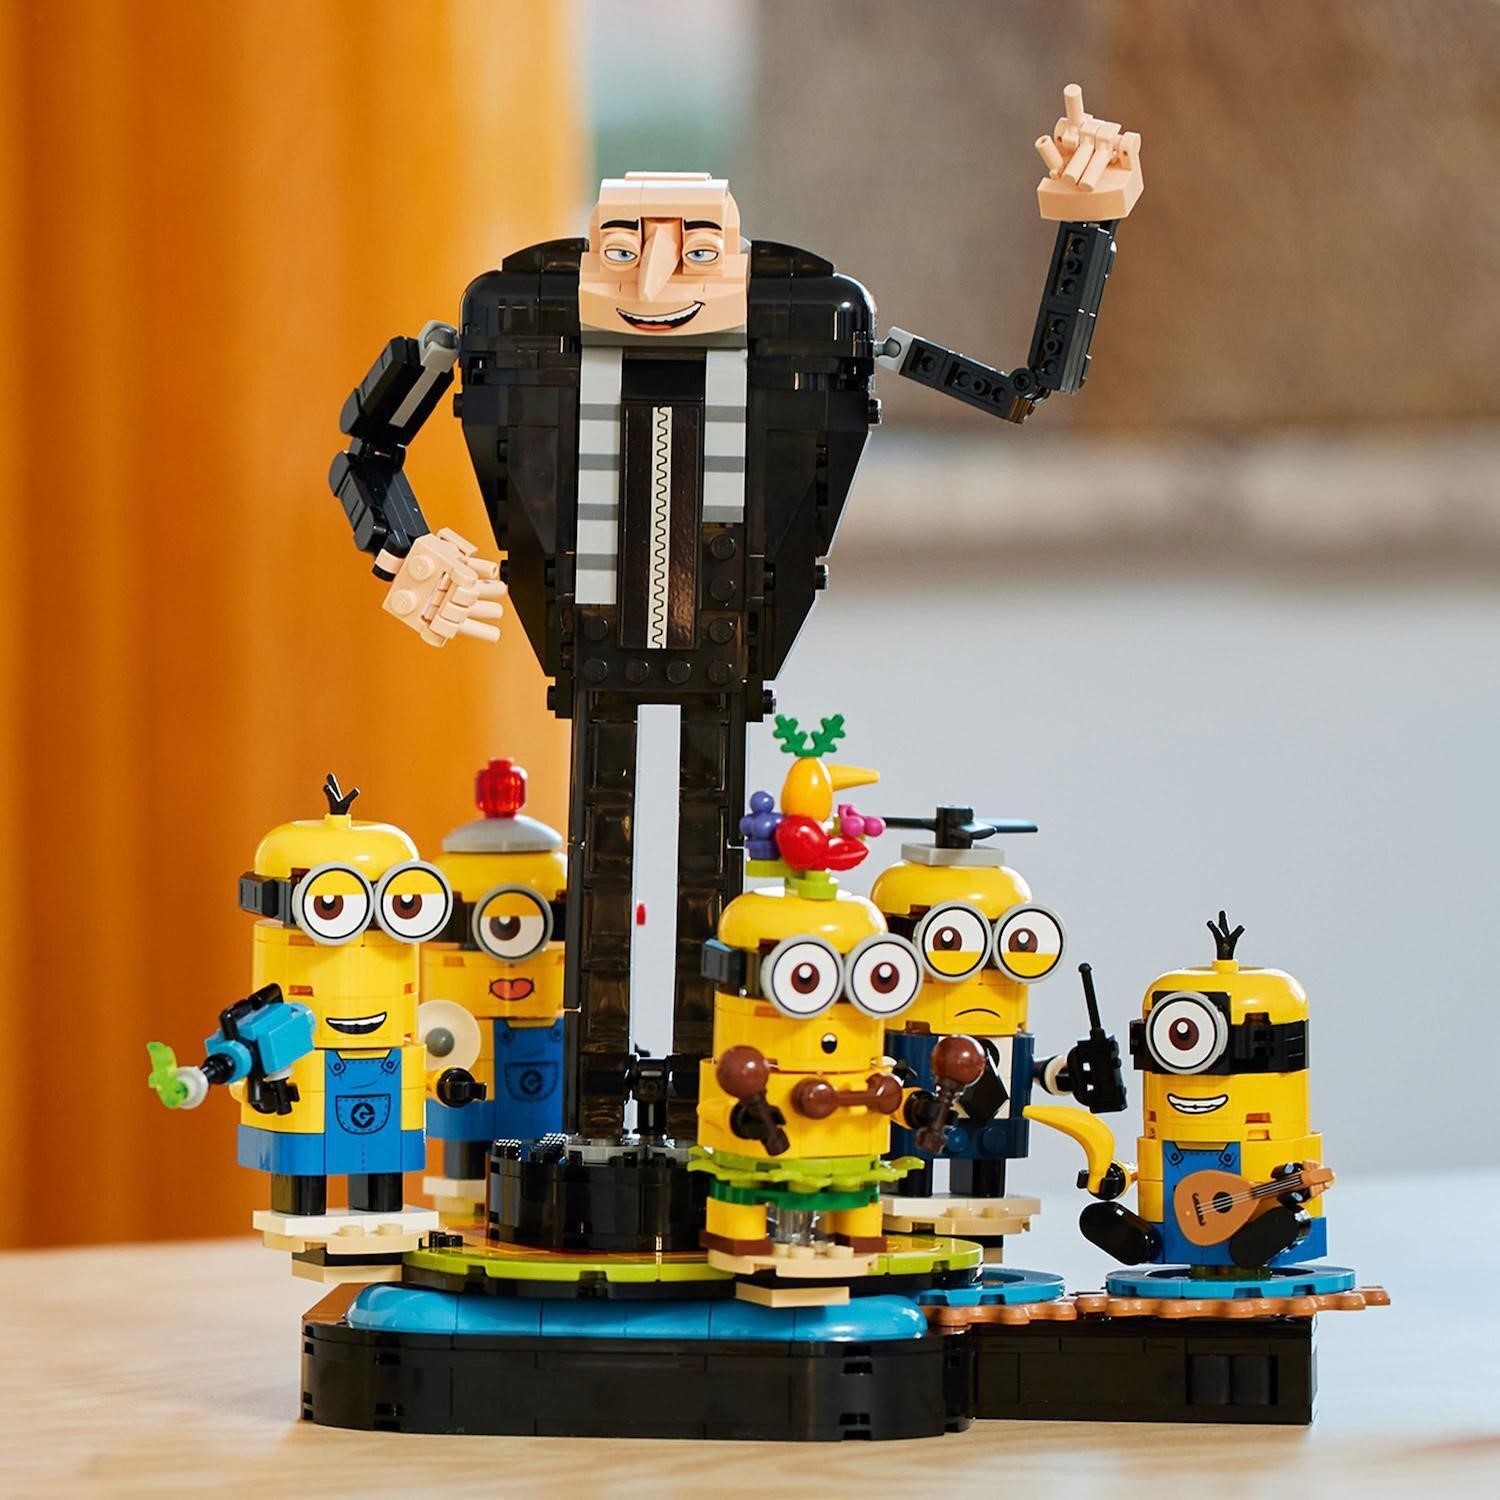 LEGO Despicable Me 4 Minions Toy Set